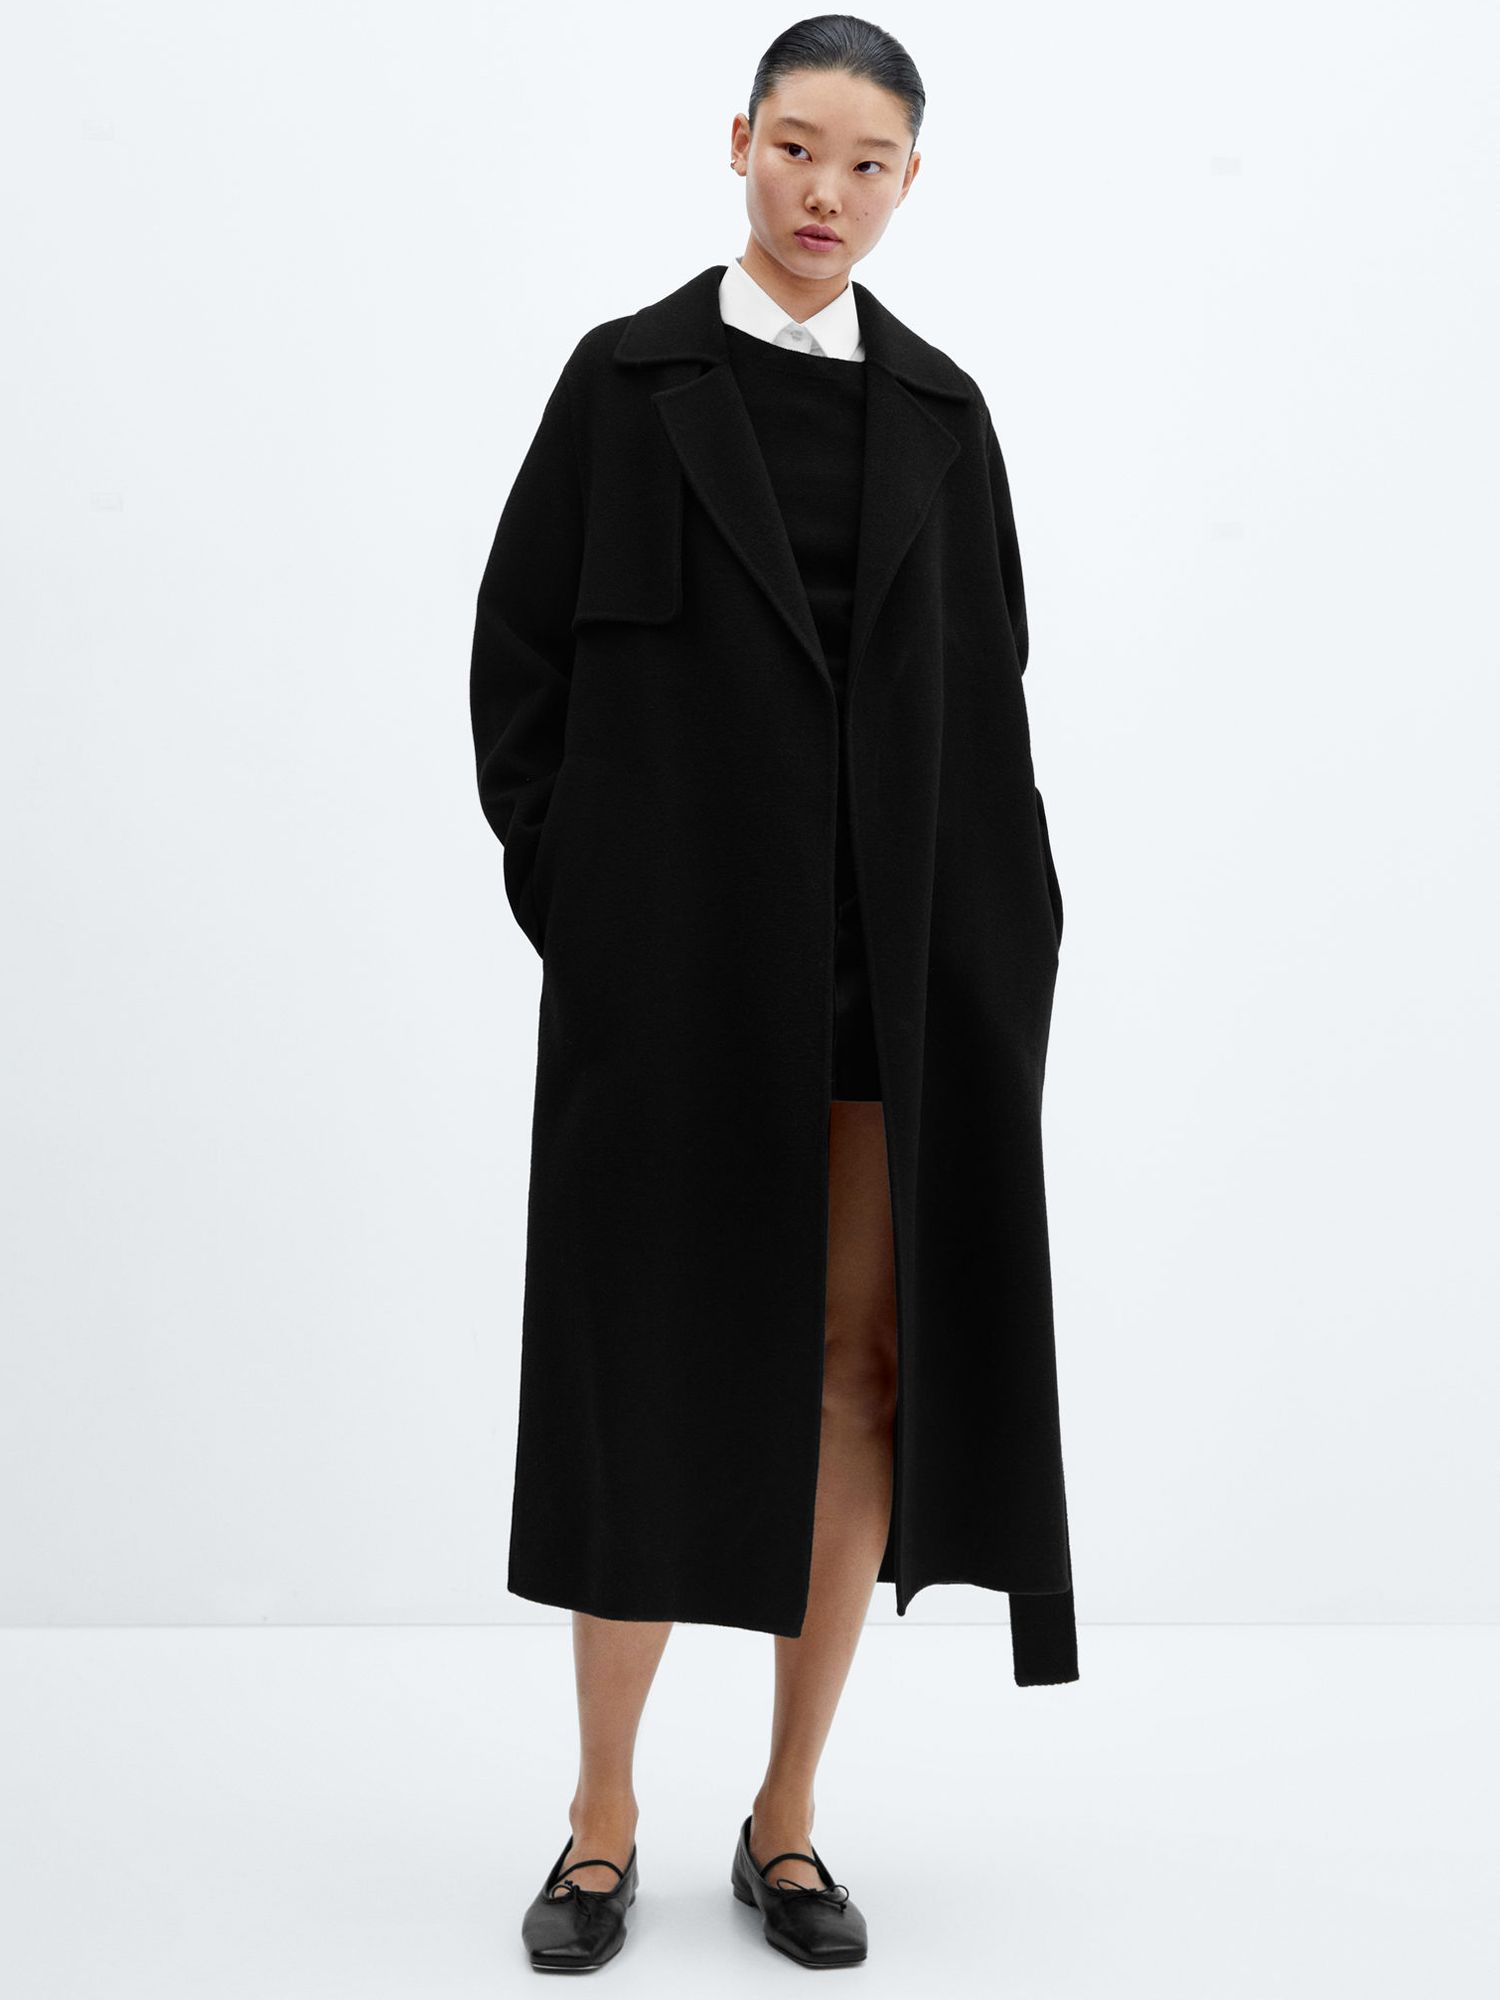 Mango London Wool Blend Coat,, Black at John Lewis & Partners